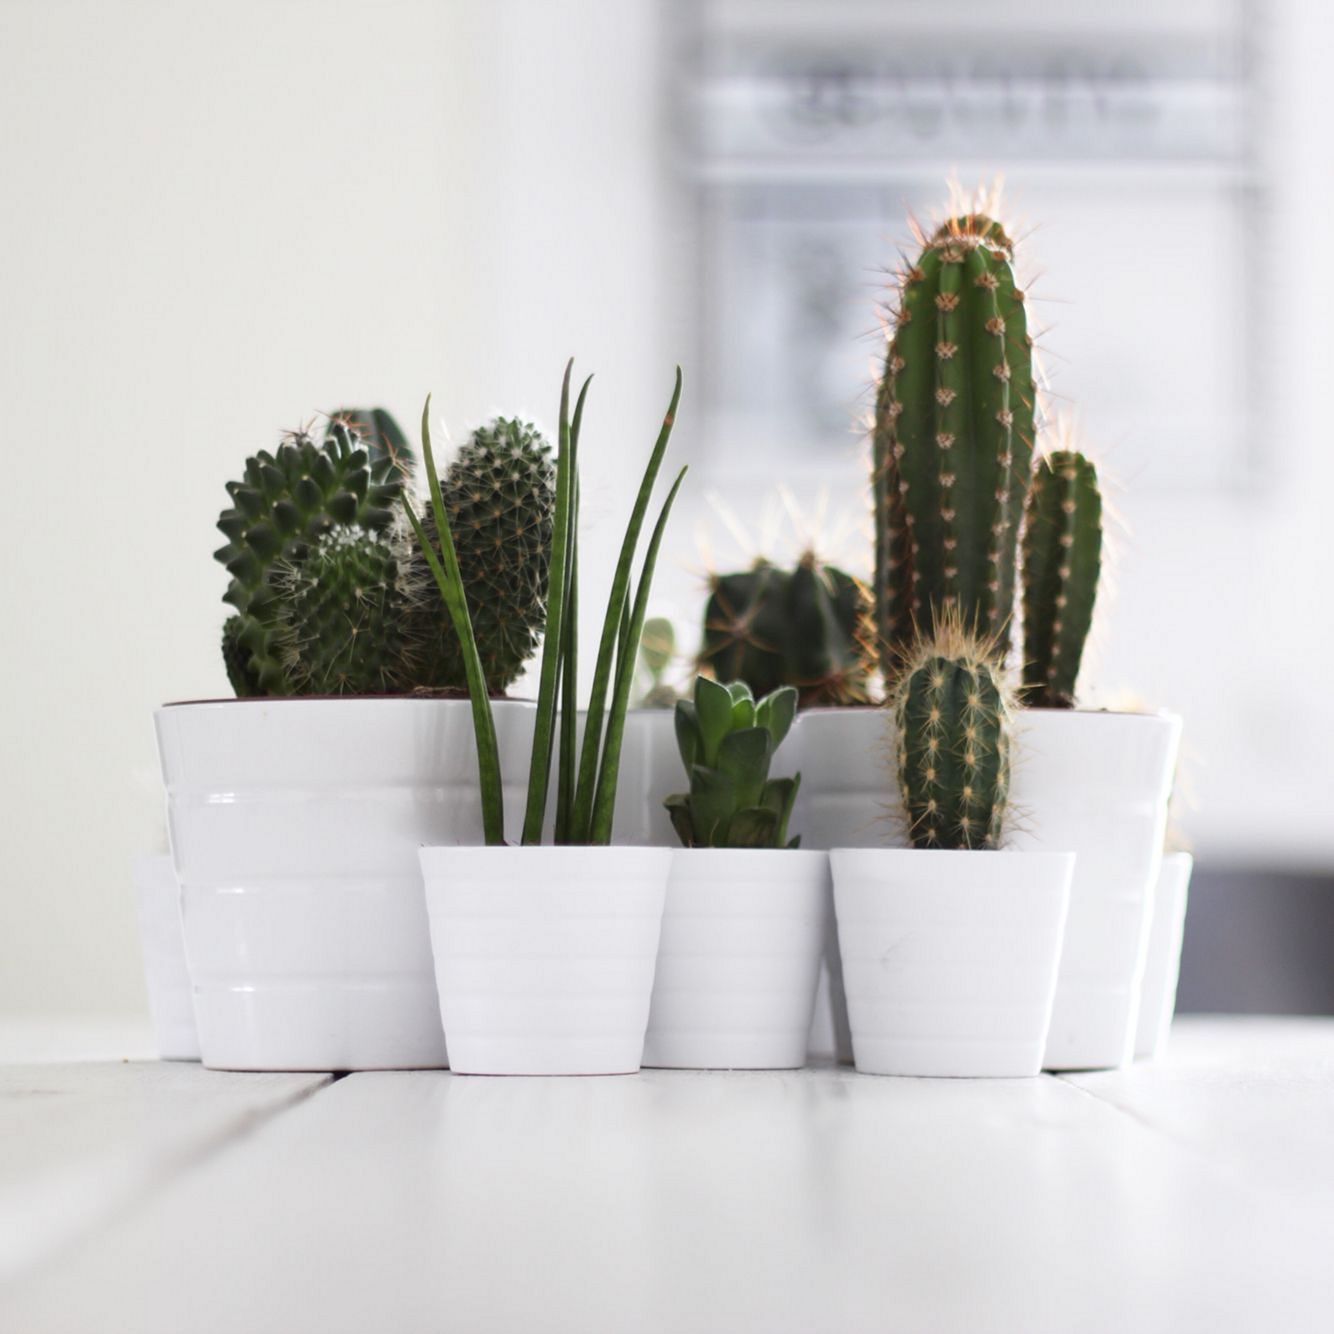 15 Incredible Indoor Cactus Plants Garden Design Ideas -   14 plants Cactus awesome ideas